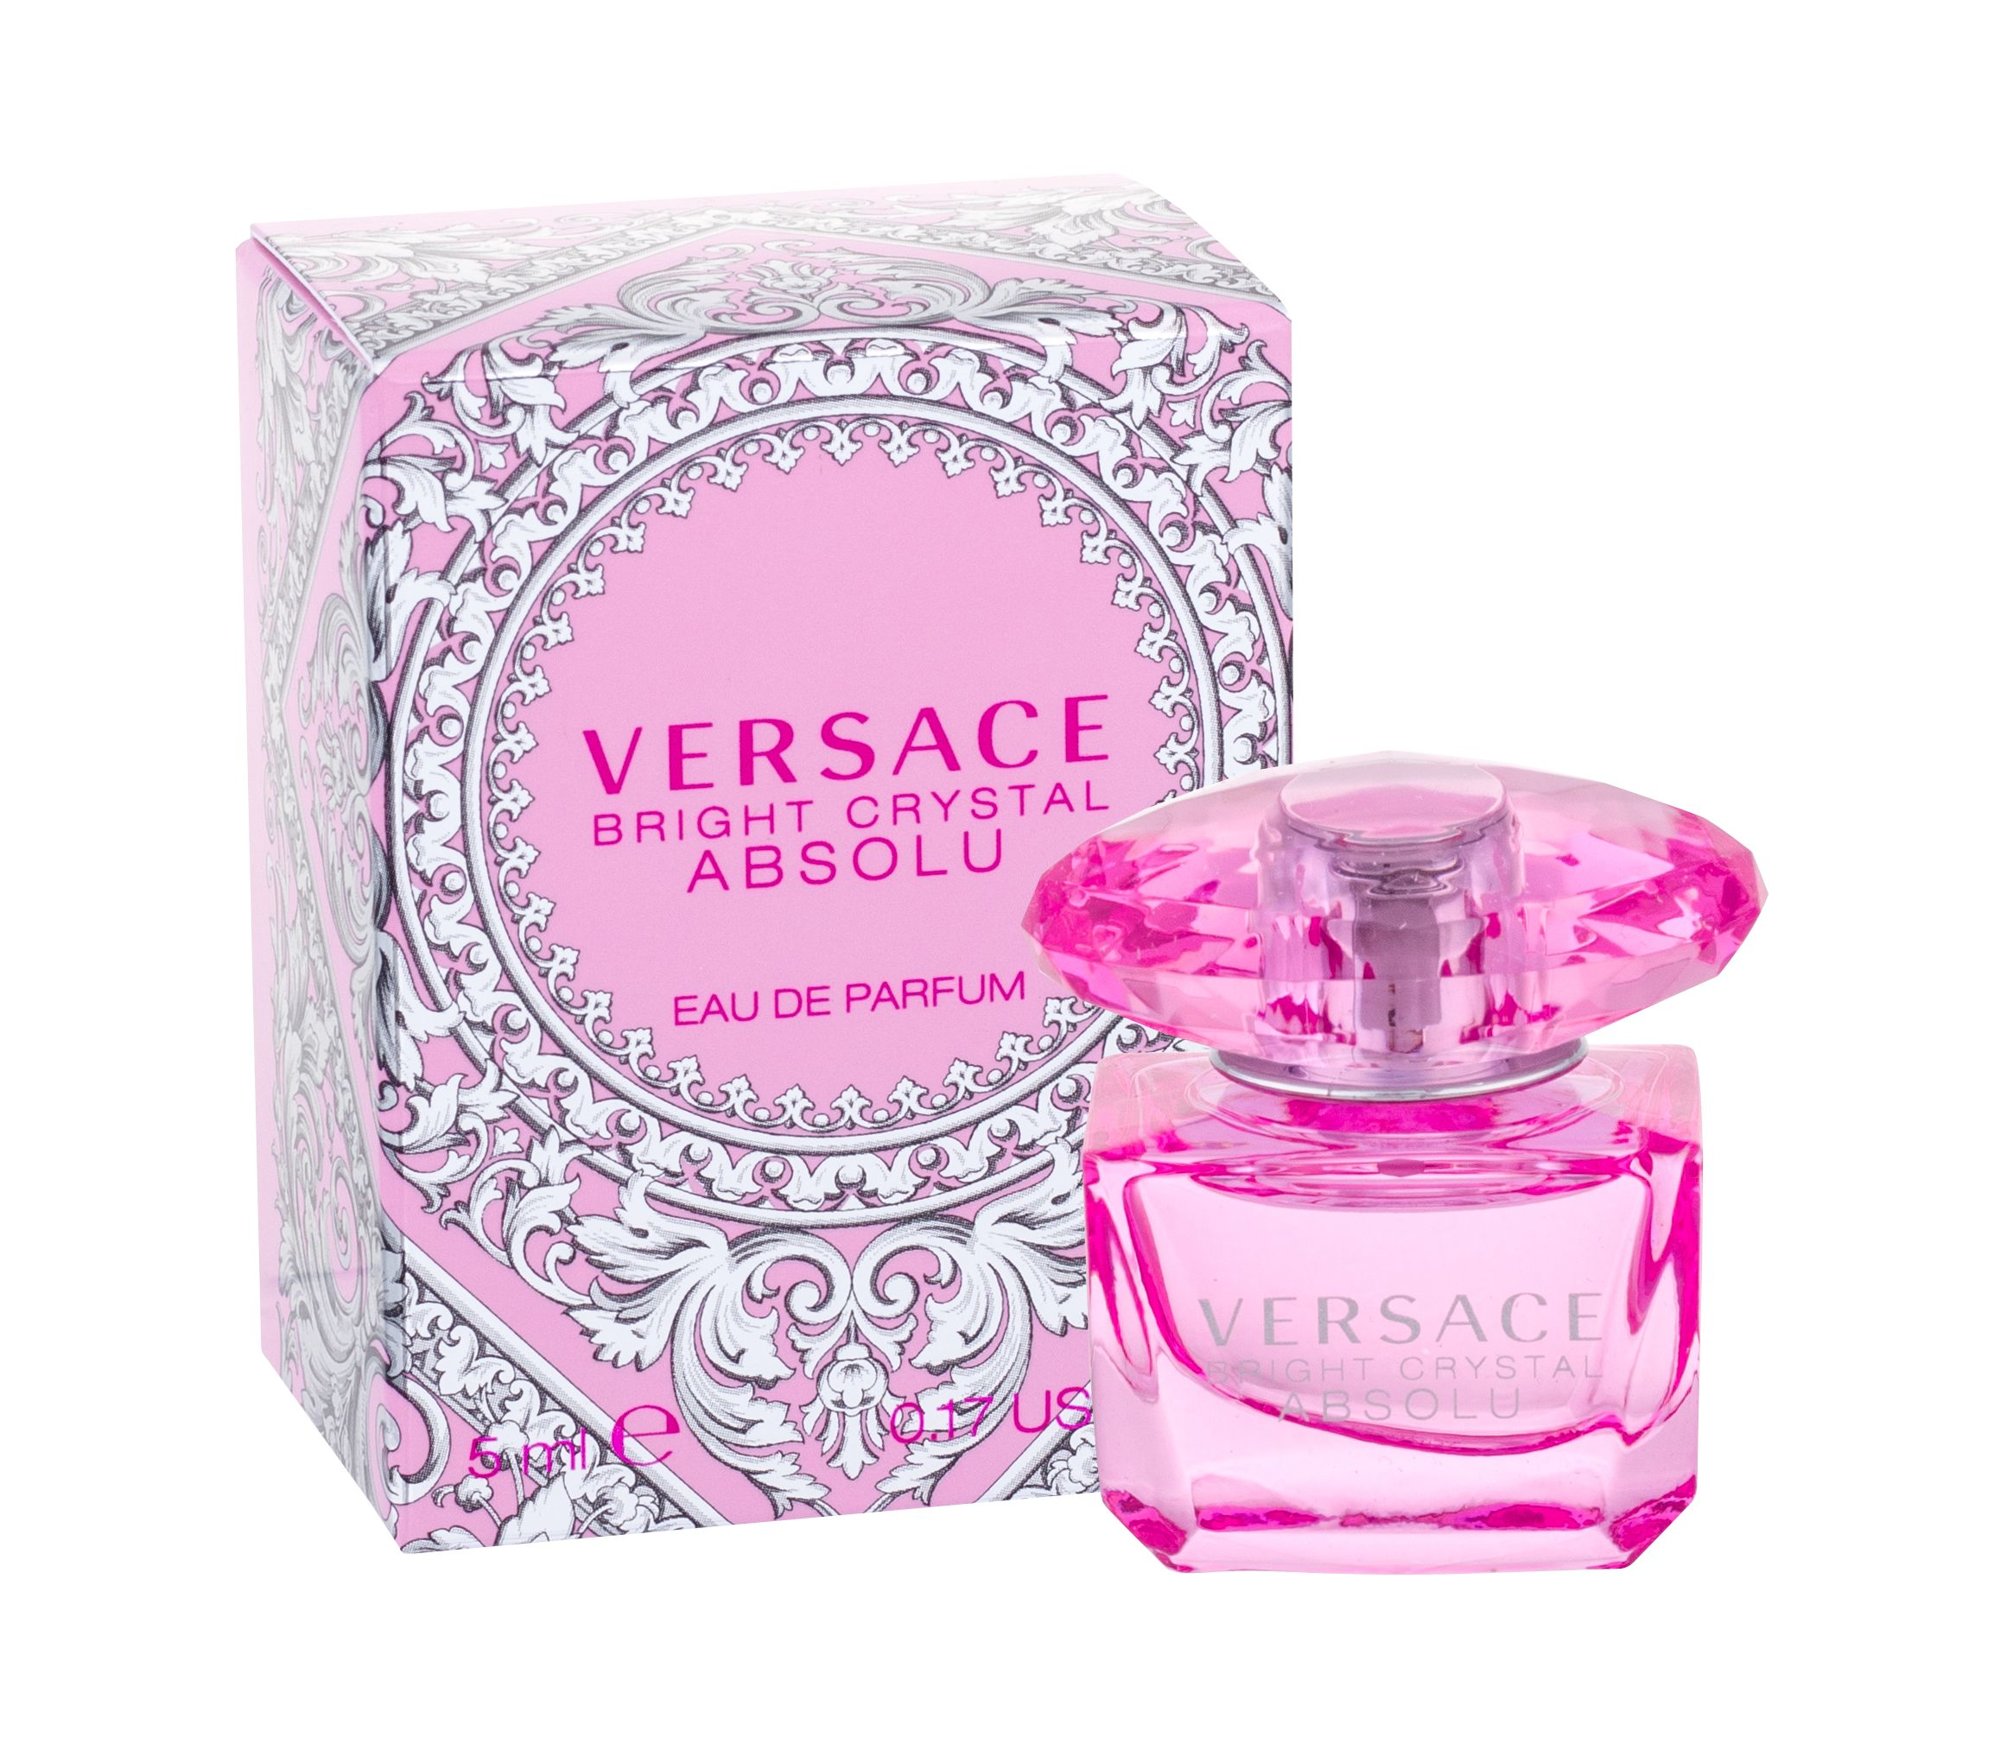 Versace Bright Crystal Absolu, edp 5ml